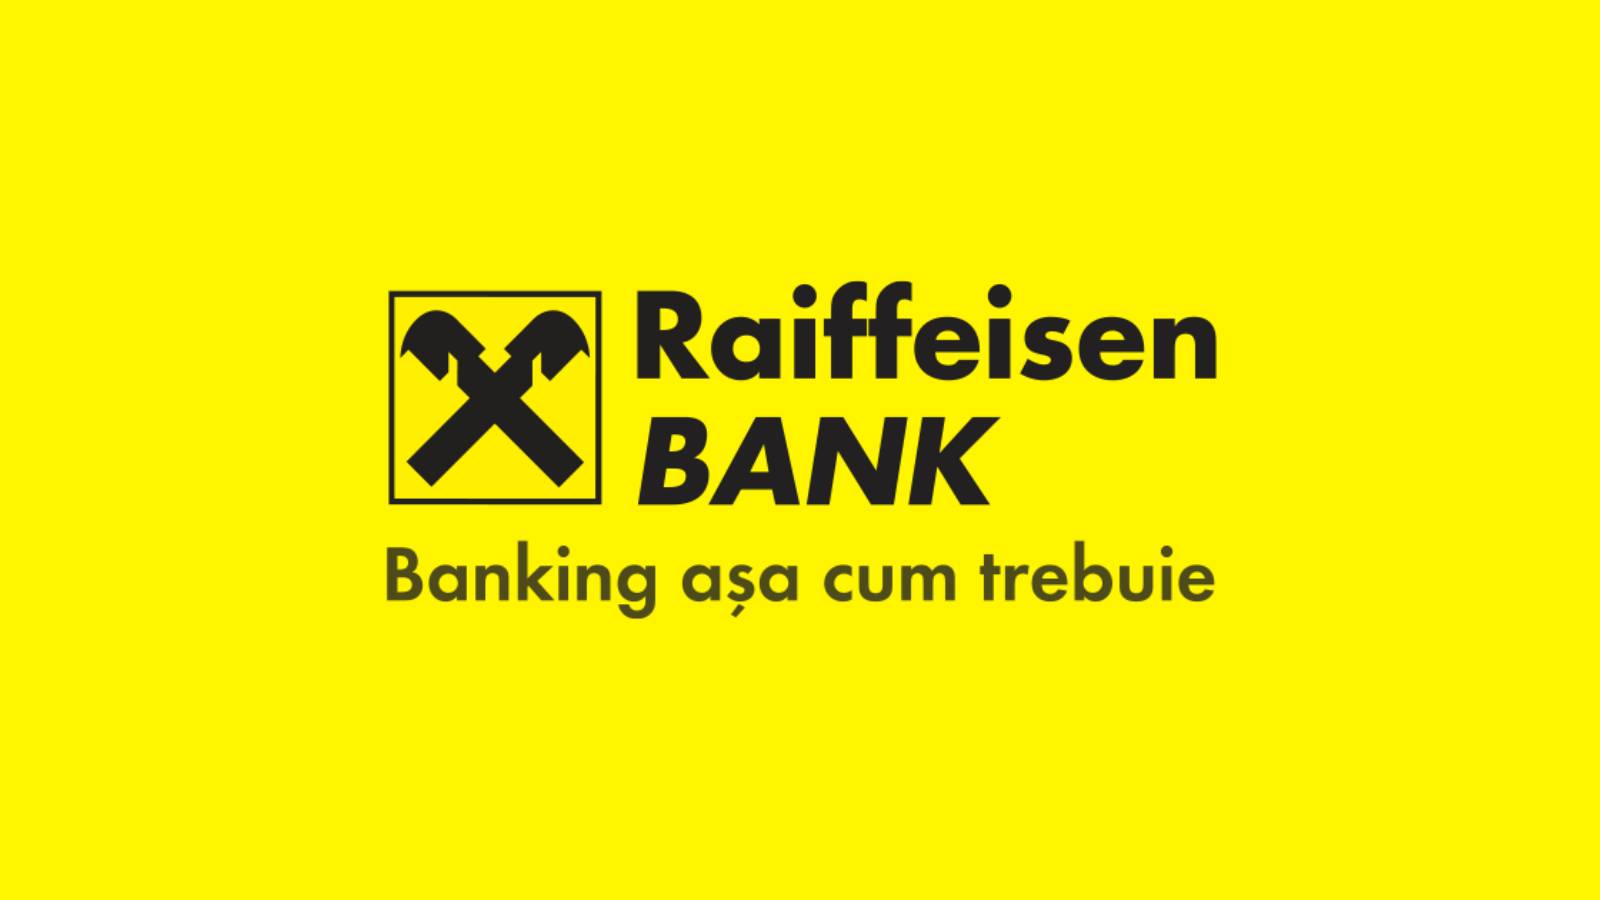 Raiffeisen Bank Informarea Oficiala GRATUIT Clientii Romania